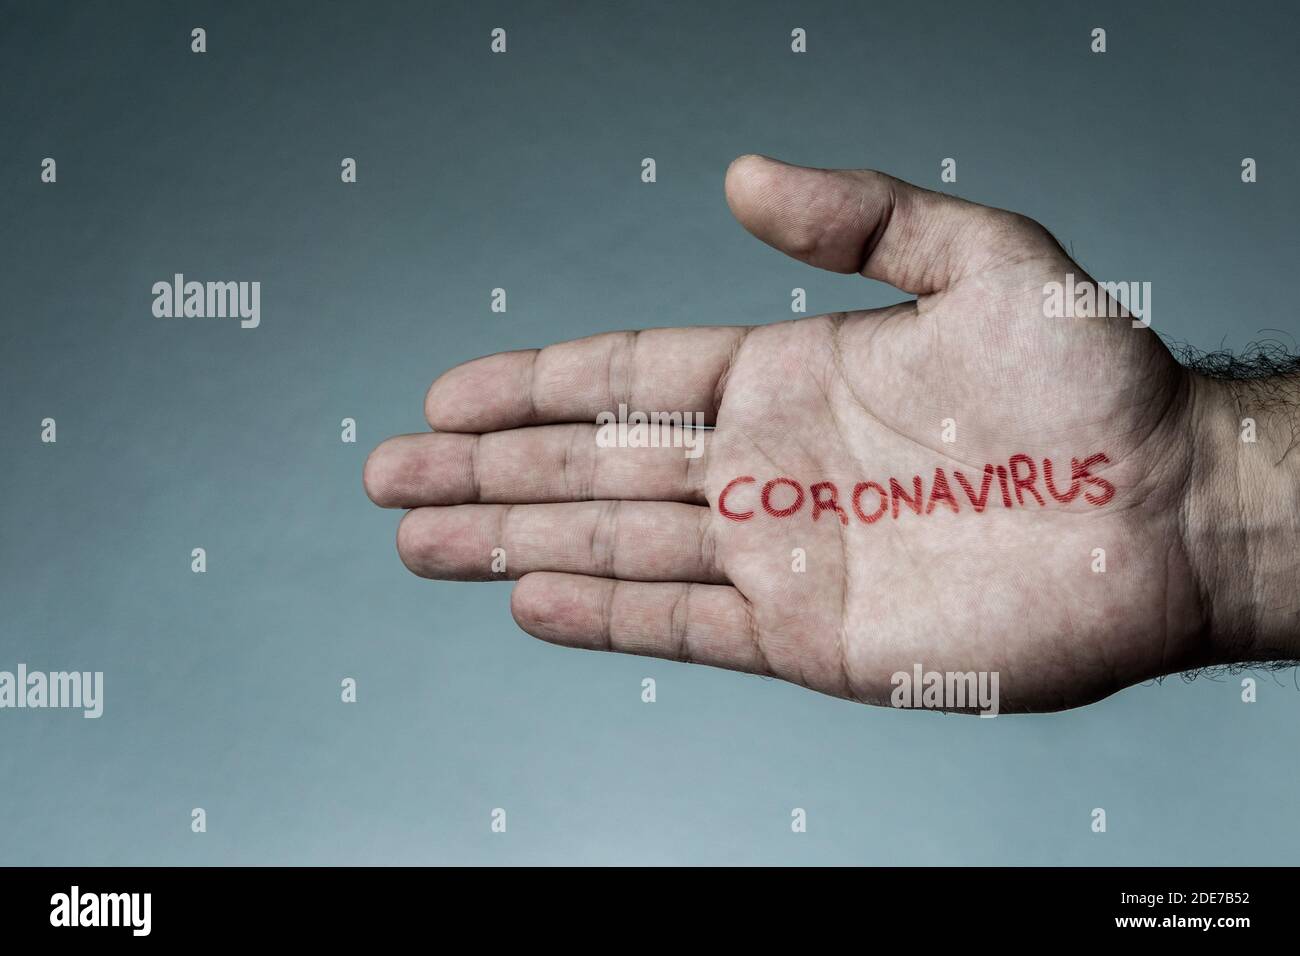 Coronavirus text written on hand of man. Covid-19, Coronavirus, SARS-CoV-2 outbreak. 2019 Novel Coronavirus concept and blue background. Stock Photo